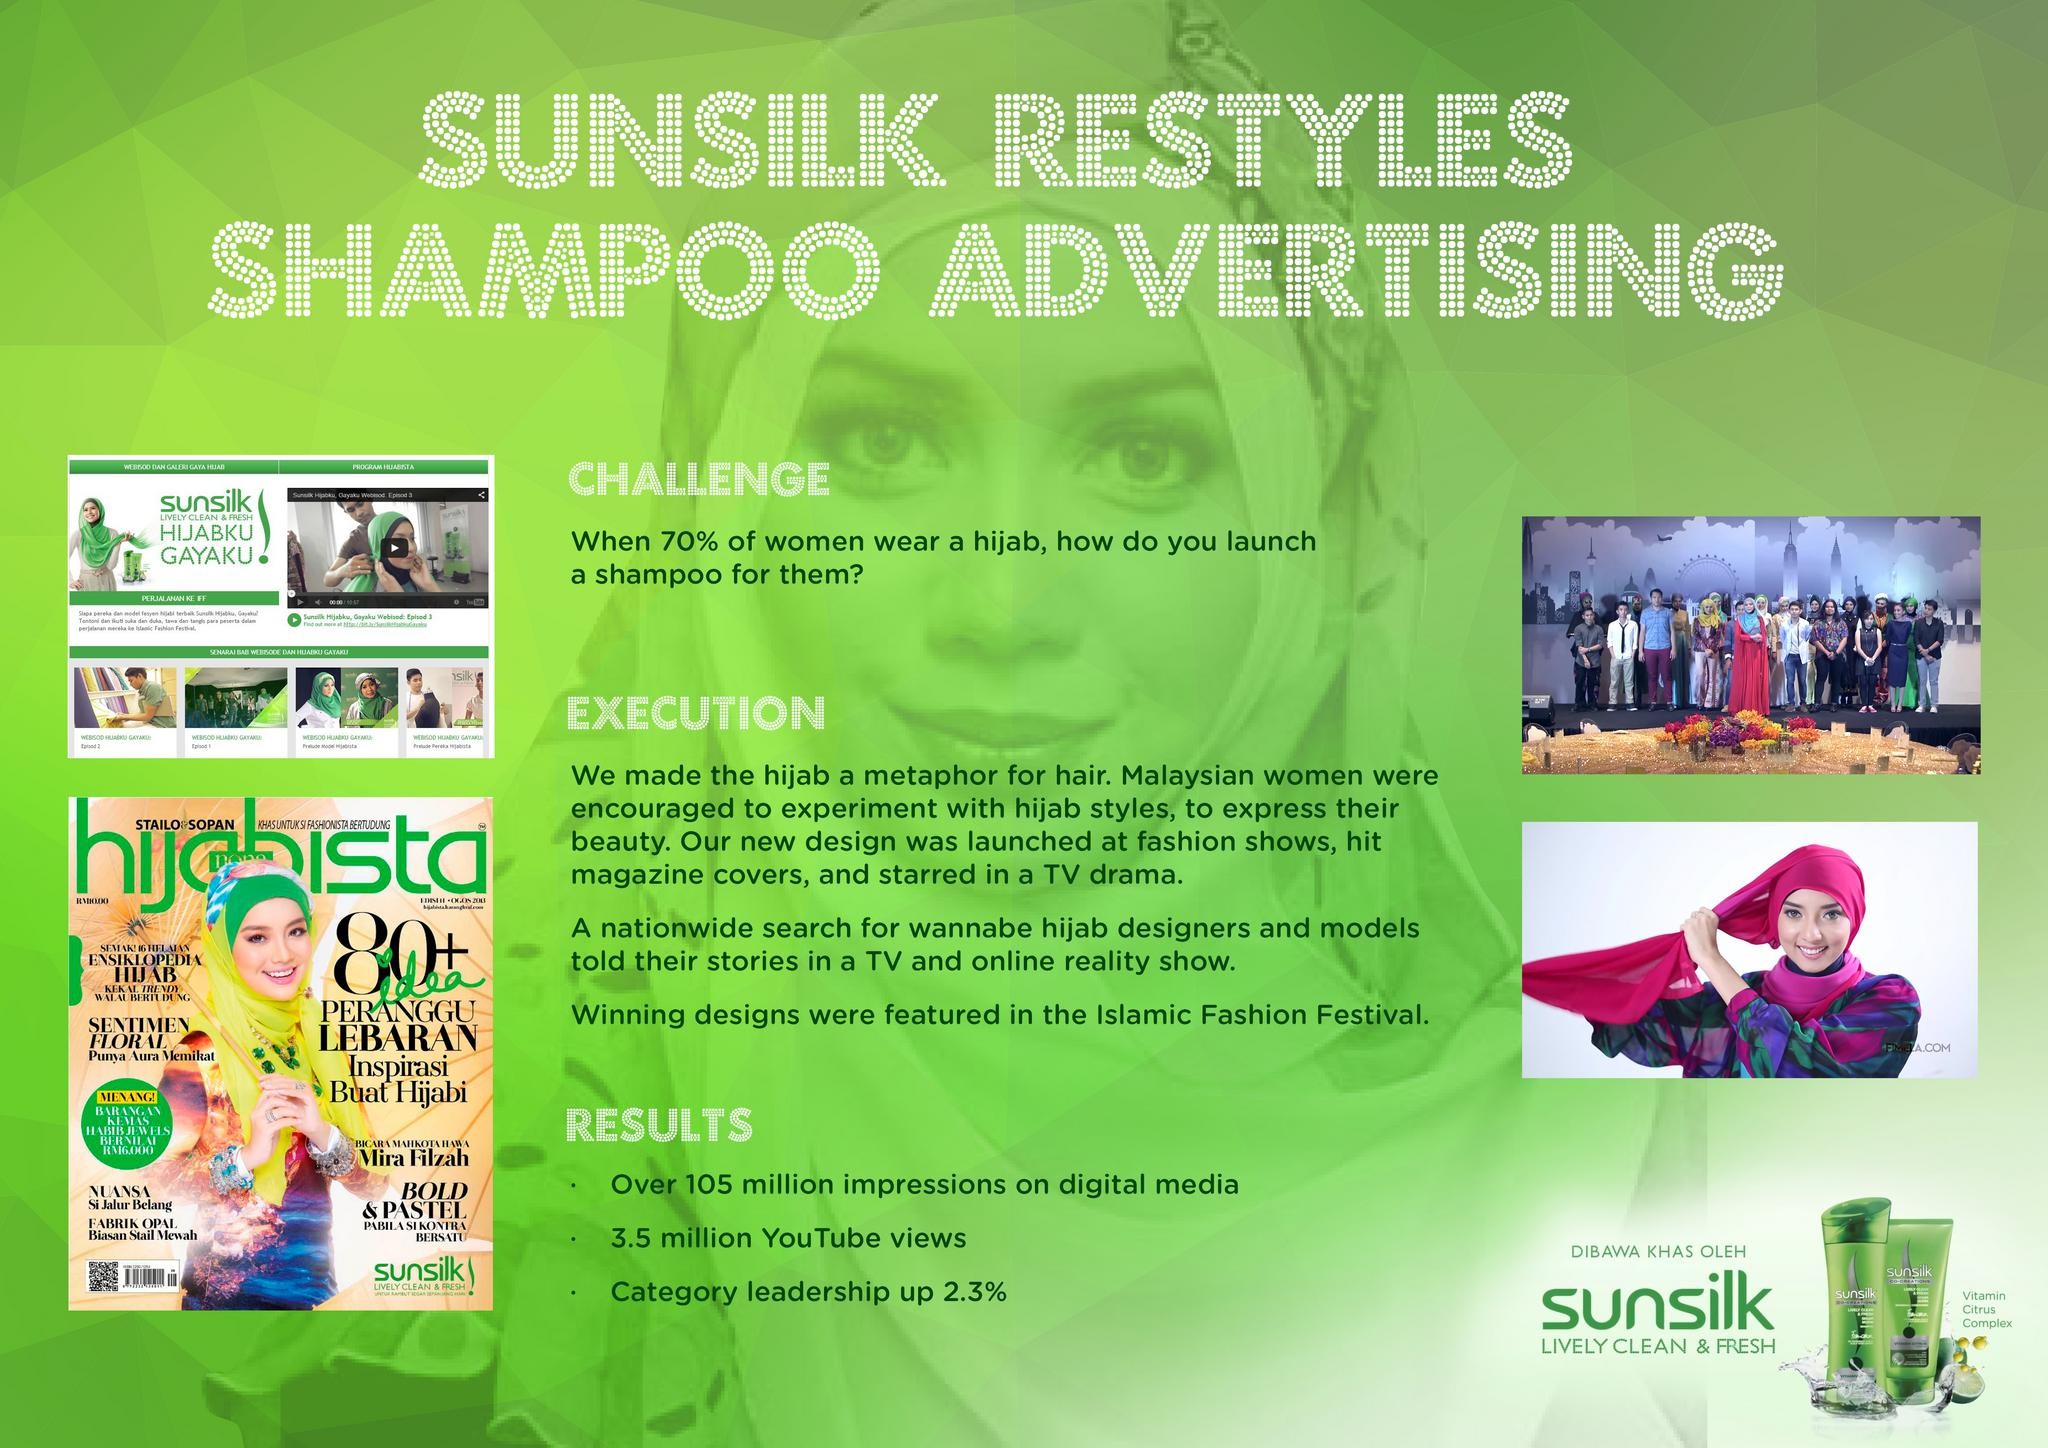 SUNSILK RESTYLES SHAMPOO ADVERTISING